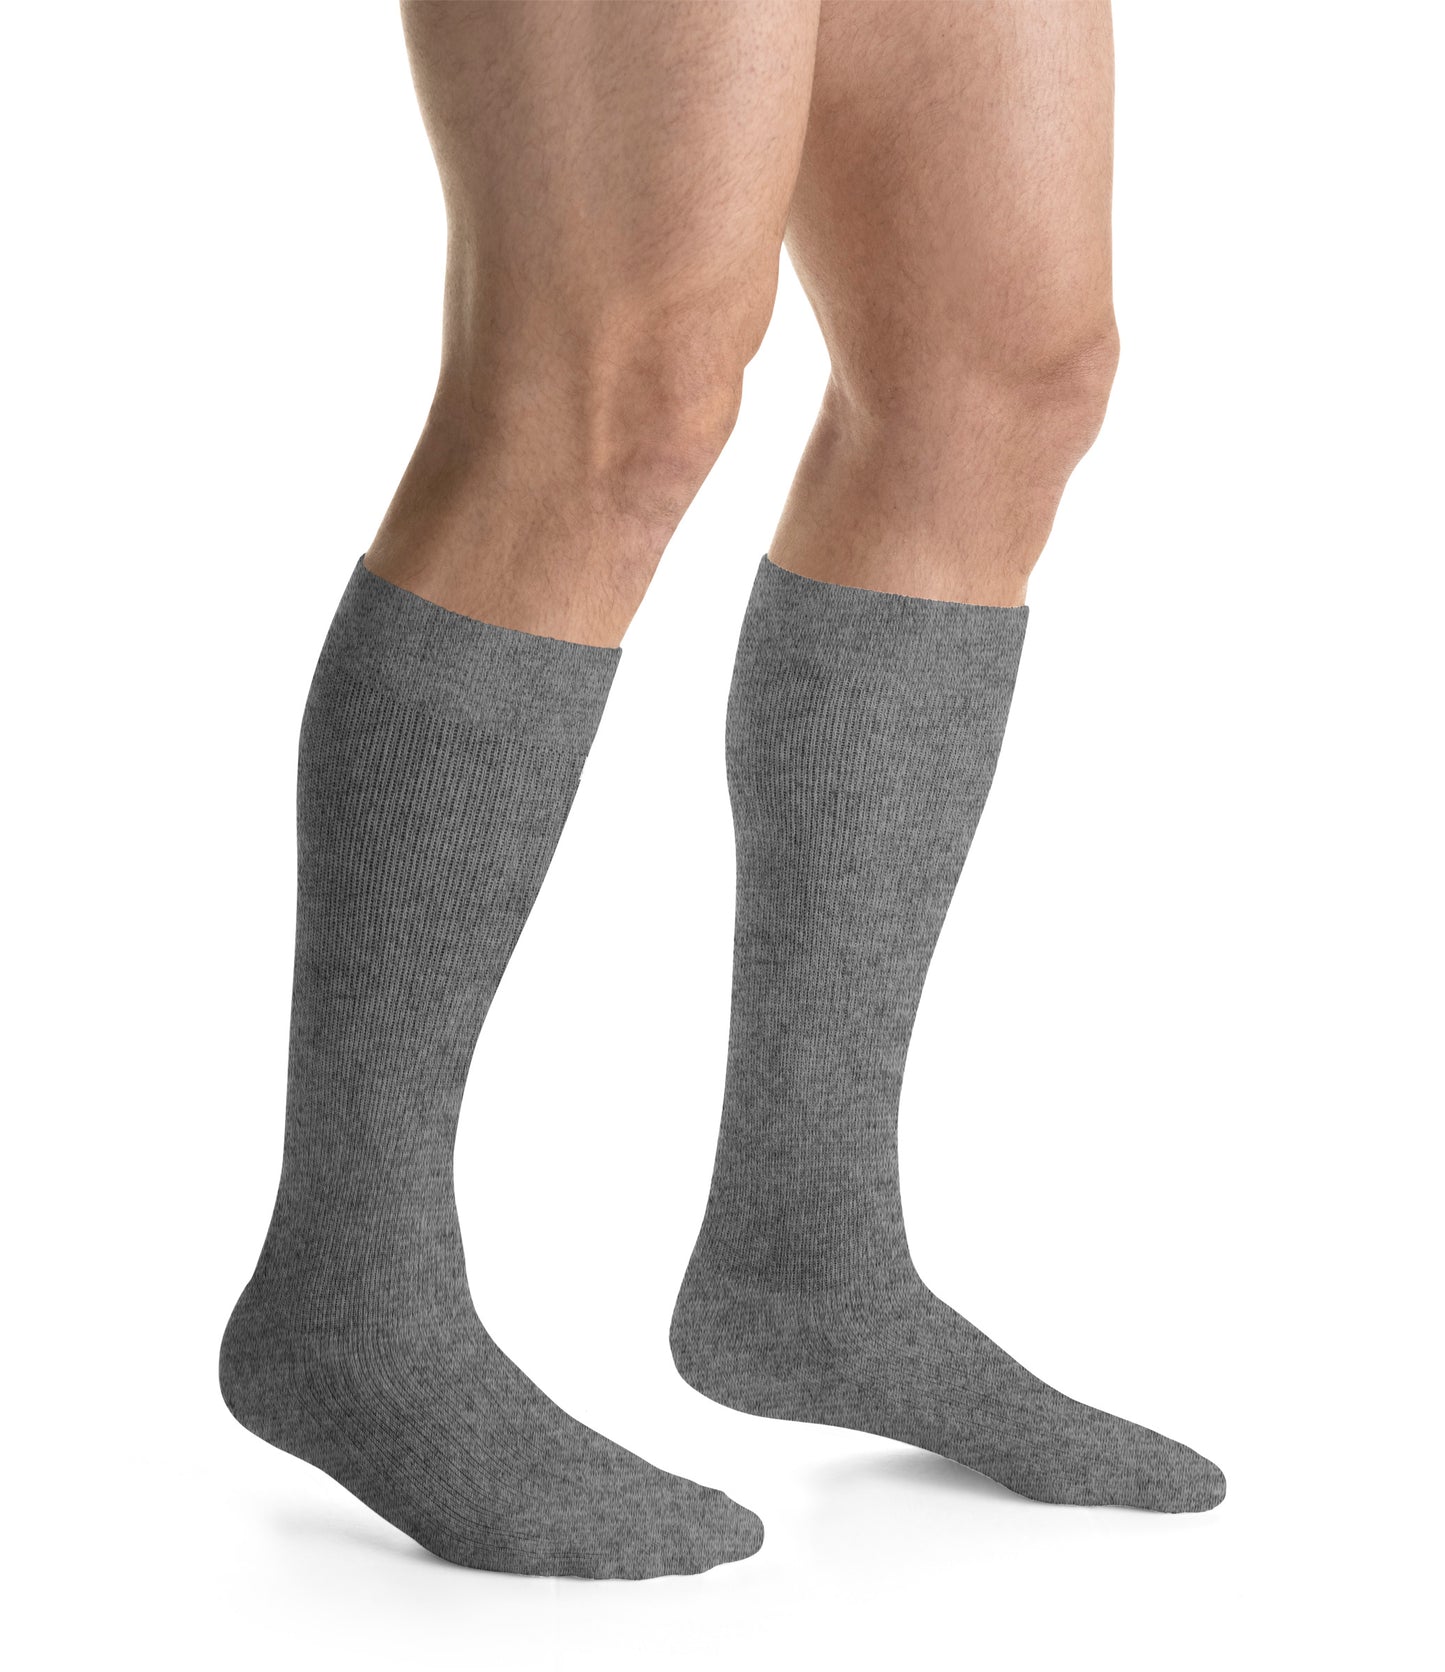 JOBST ActiveWear Compression Socks 15-20 mmHg Knee High Closed Toe